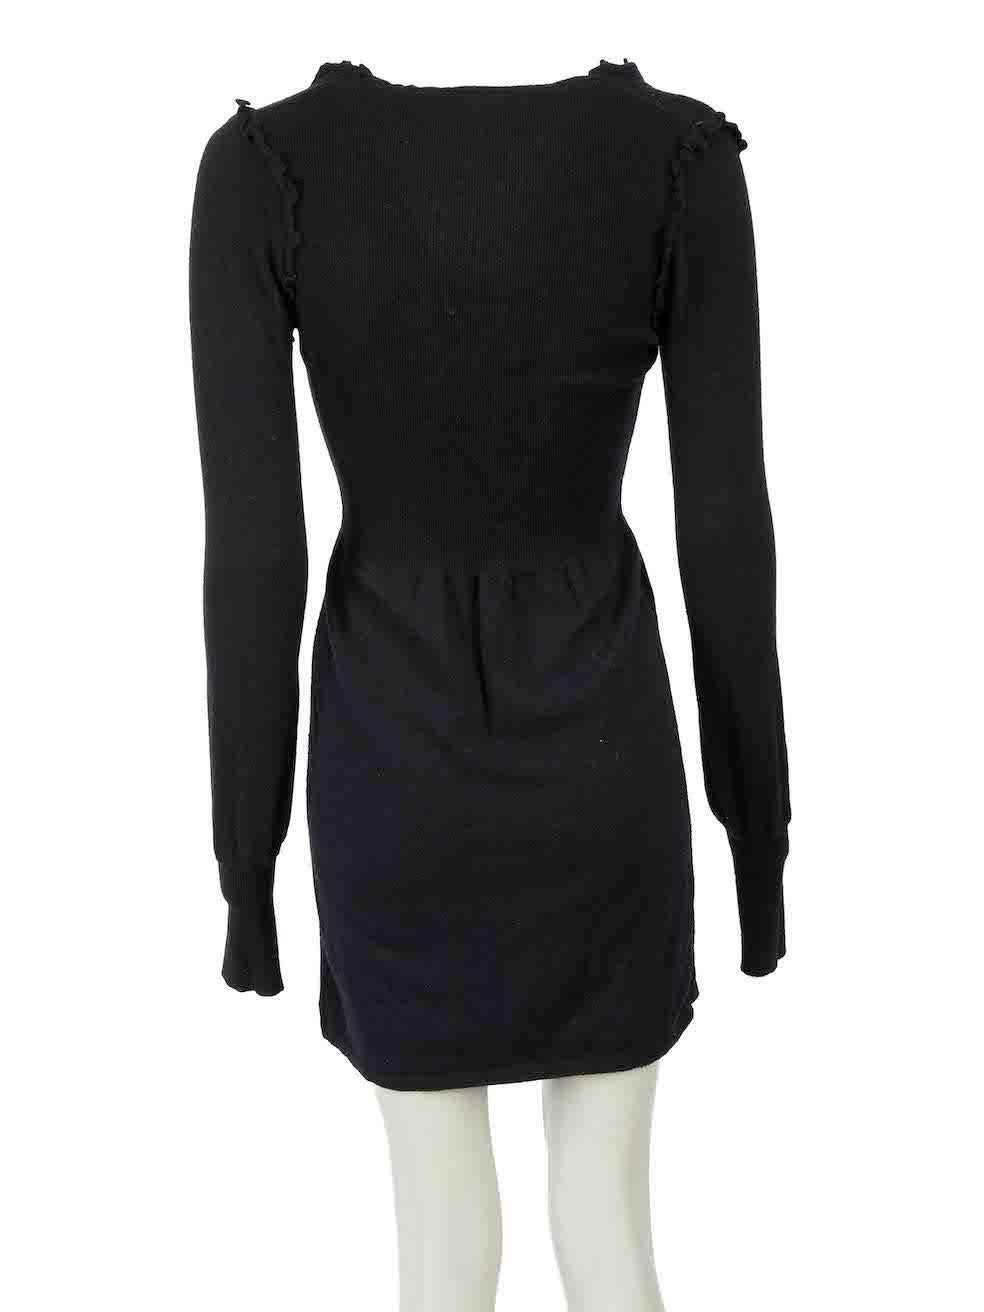 Jasmine Di Milo Vintage Black Ruffle Knit Dress Size S In Good Condition In London, GB